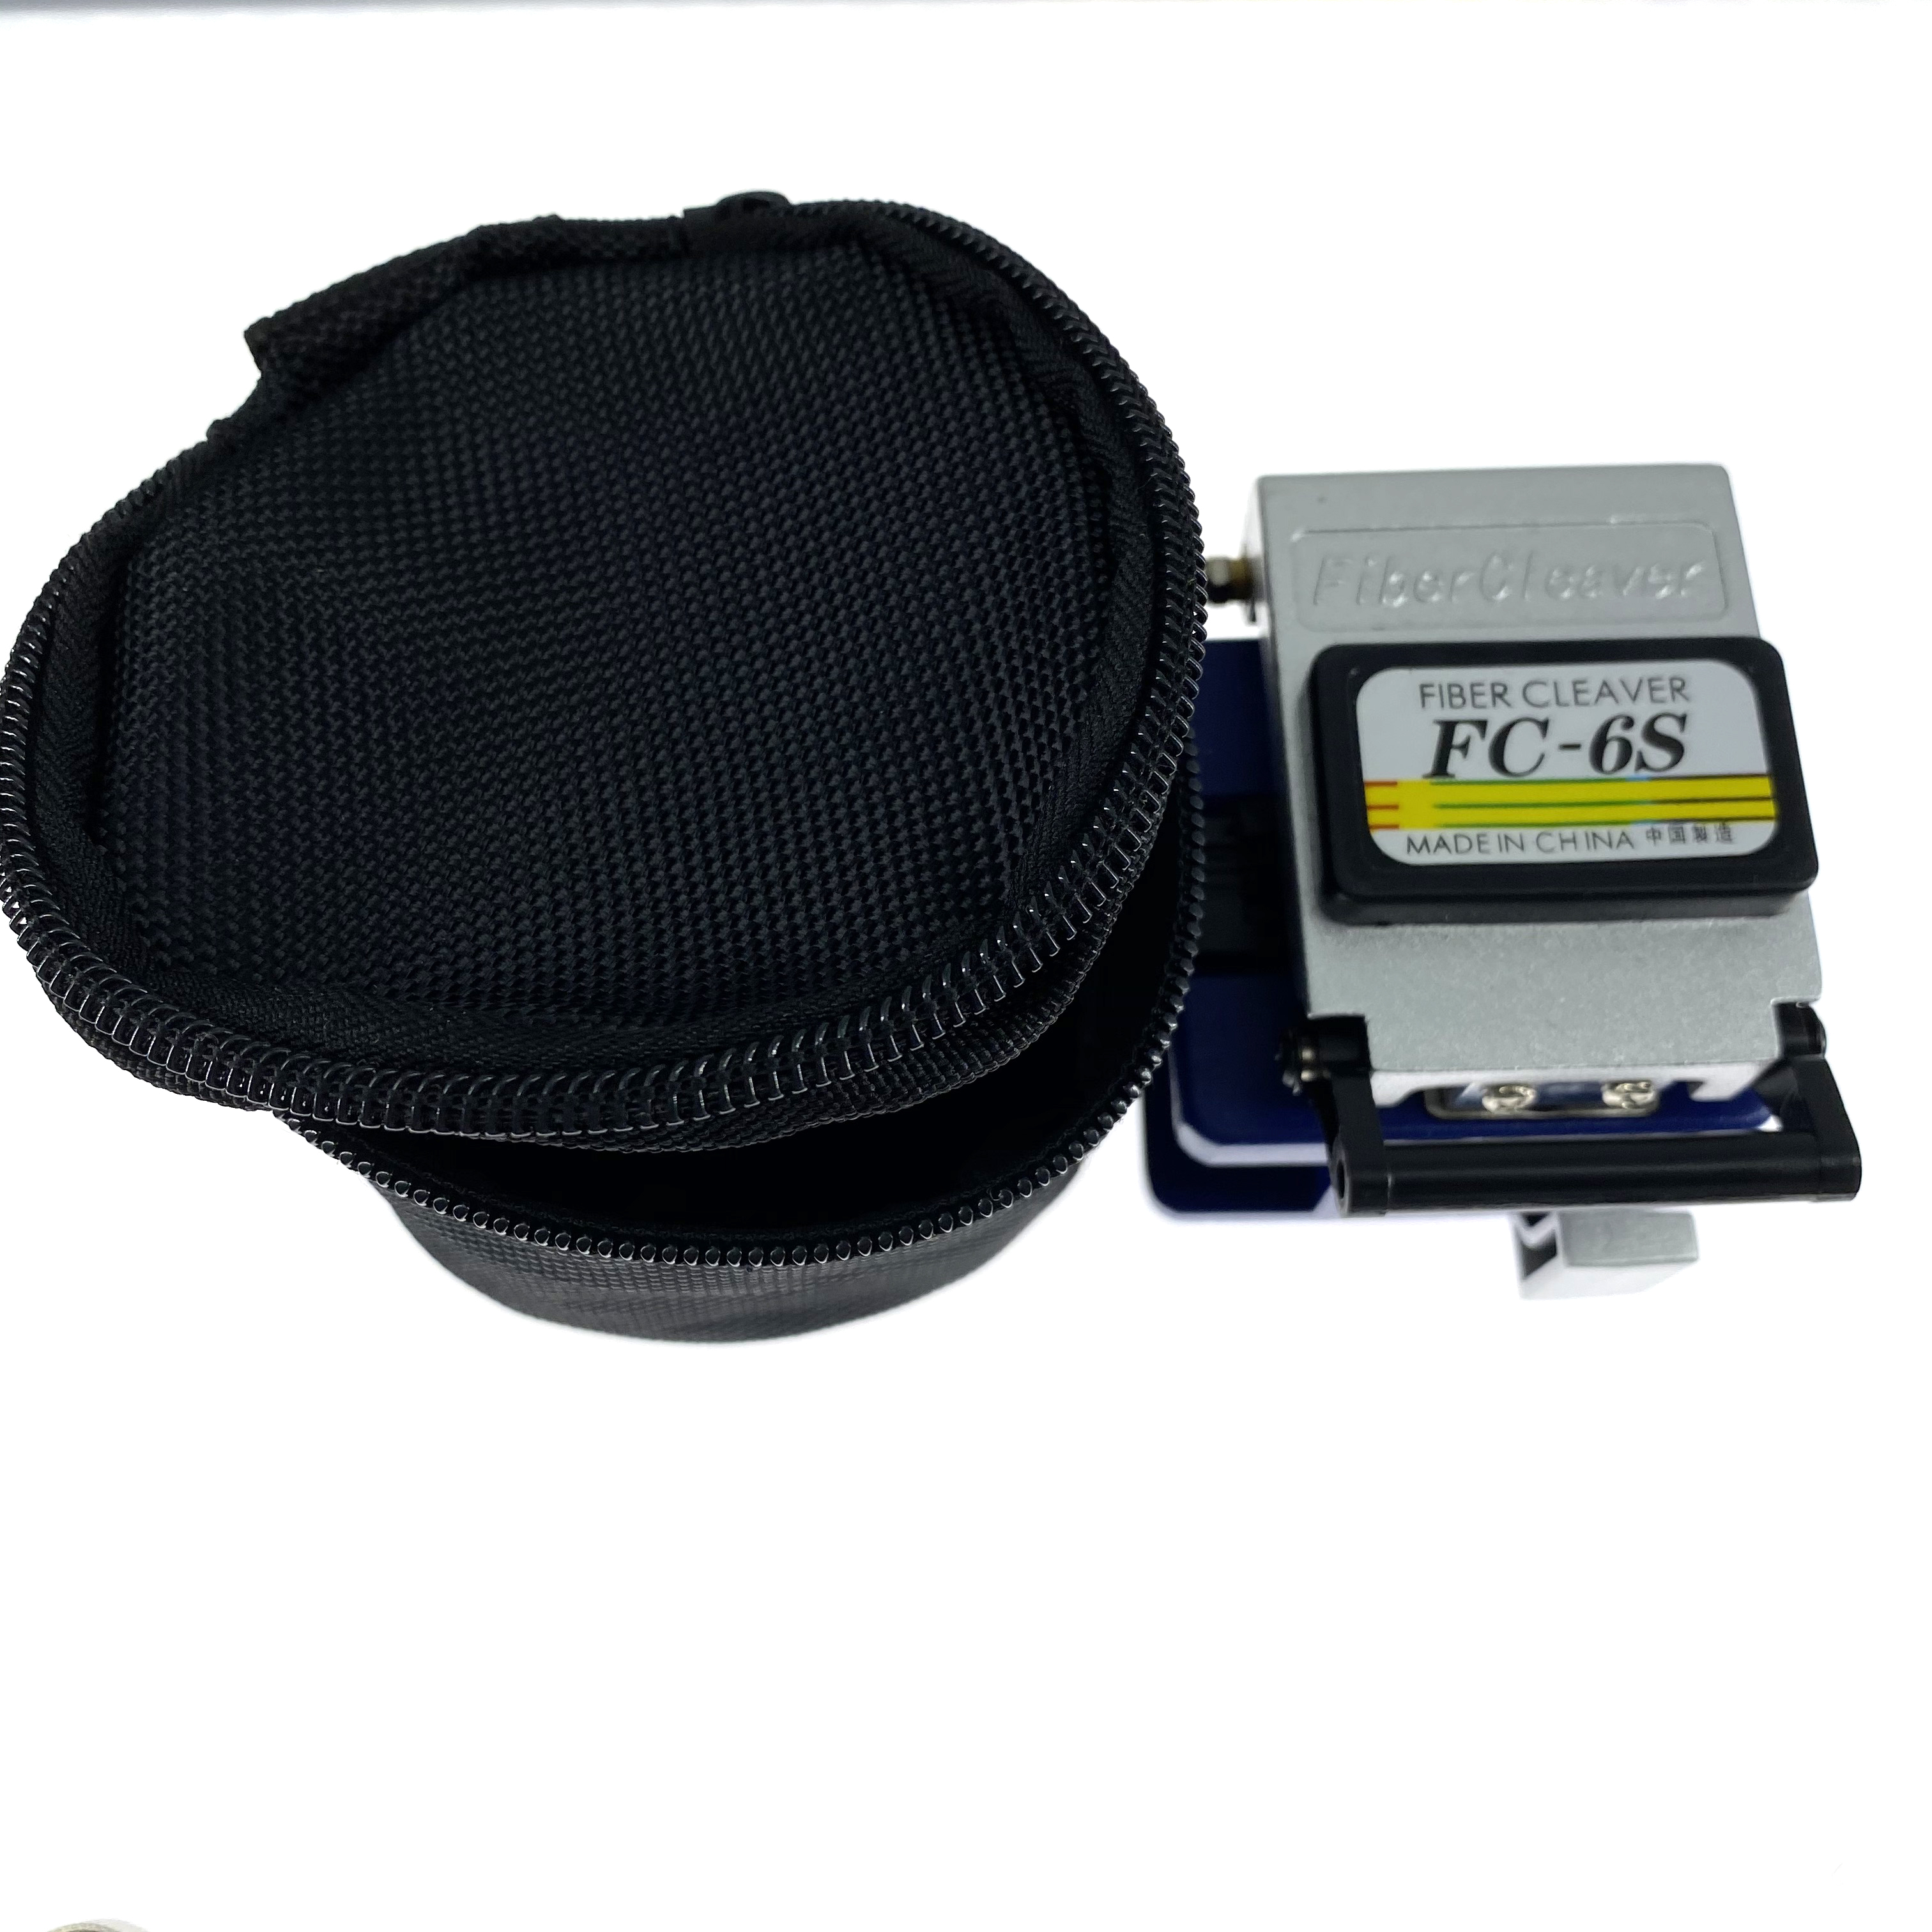 12pcs/set Fiber Optic Tool Kit with Fiber Cleaver FTTH -70~+10dBm Optical Power Meter 10mW Visual Fault Lcator 10km